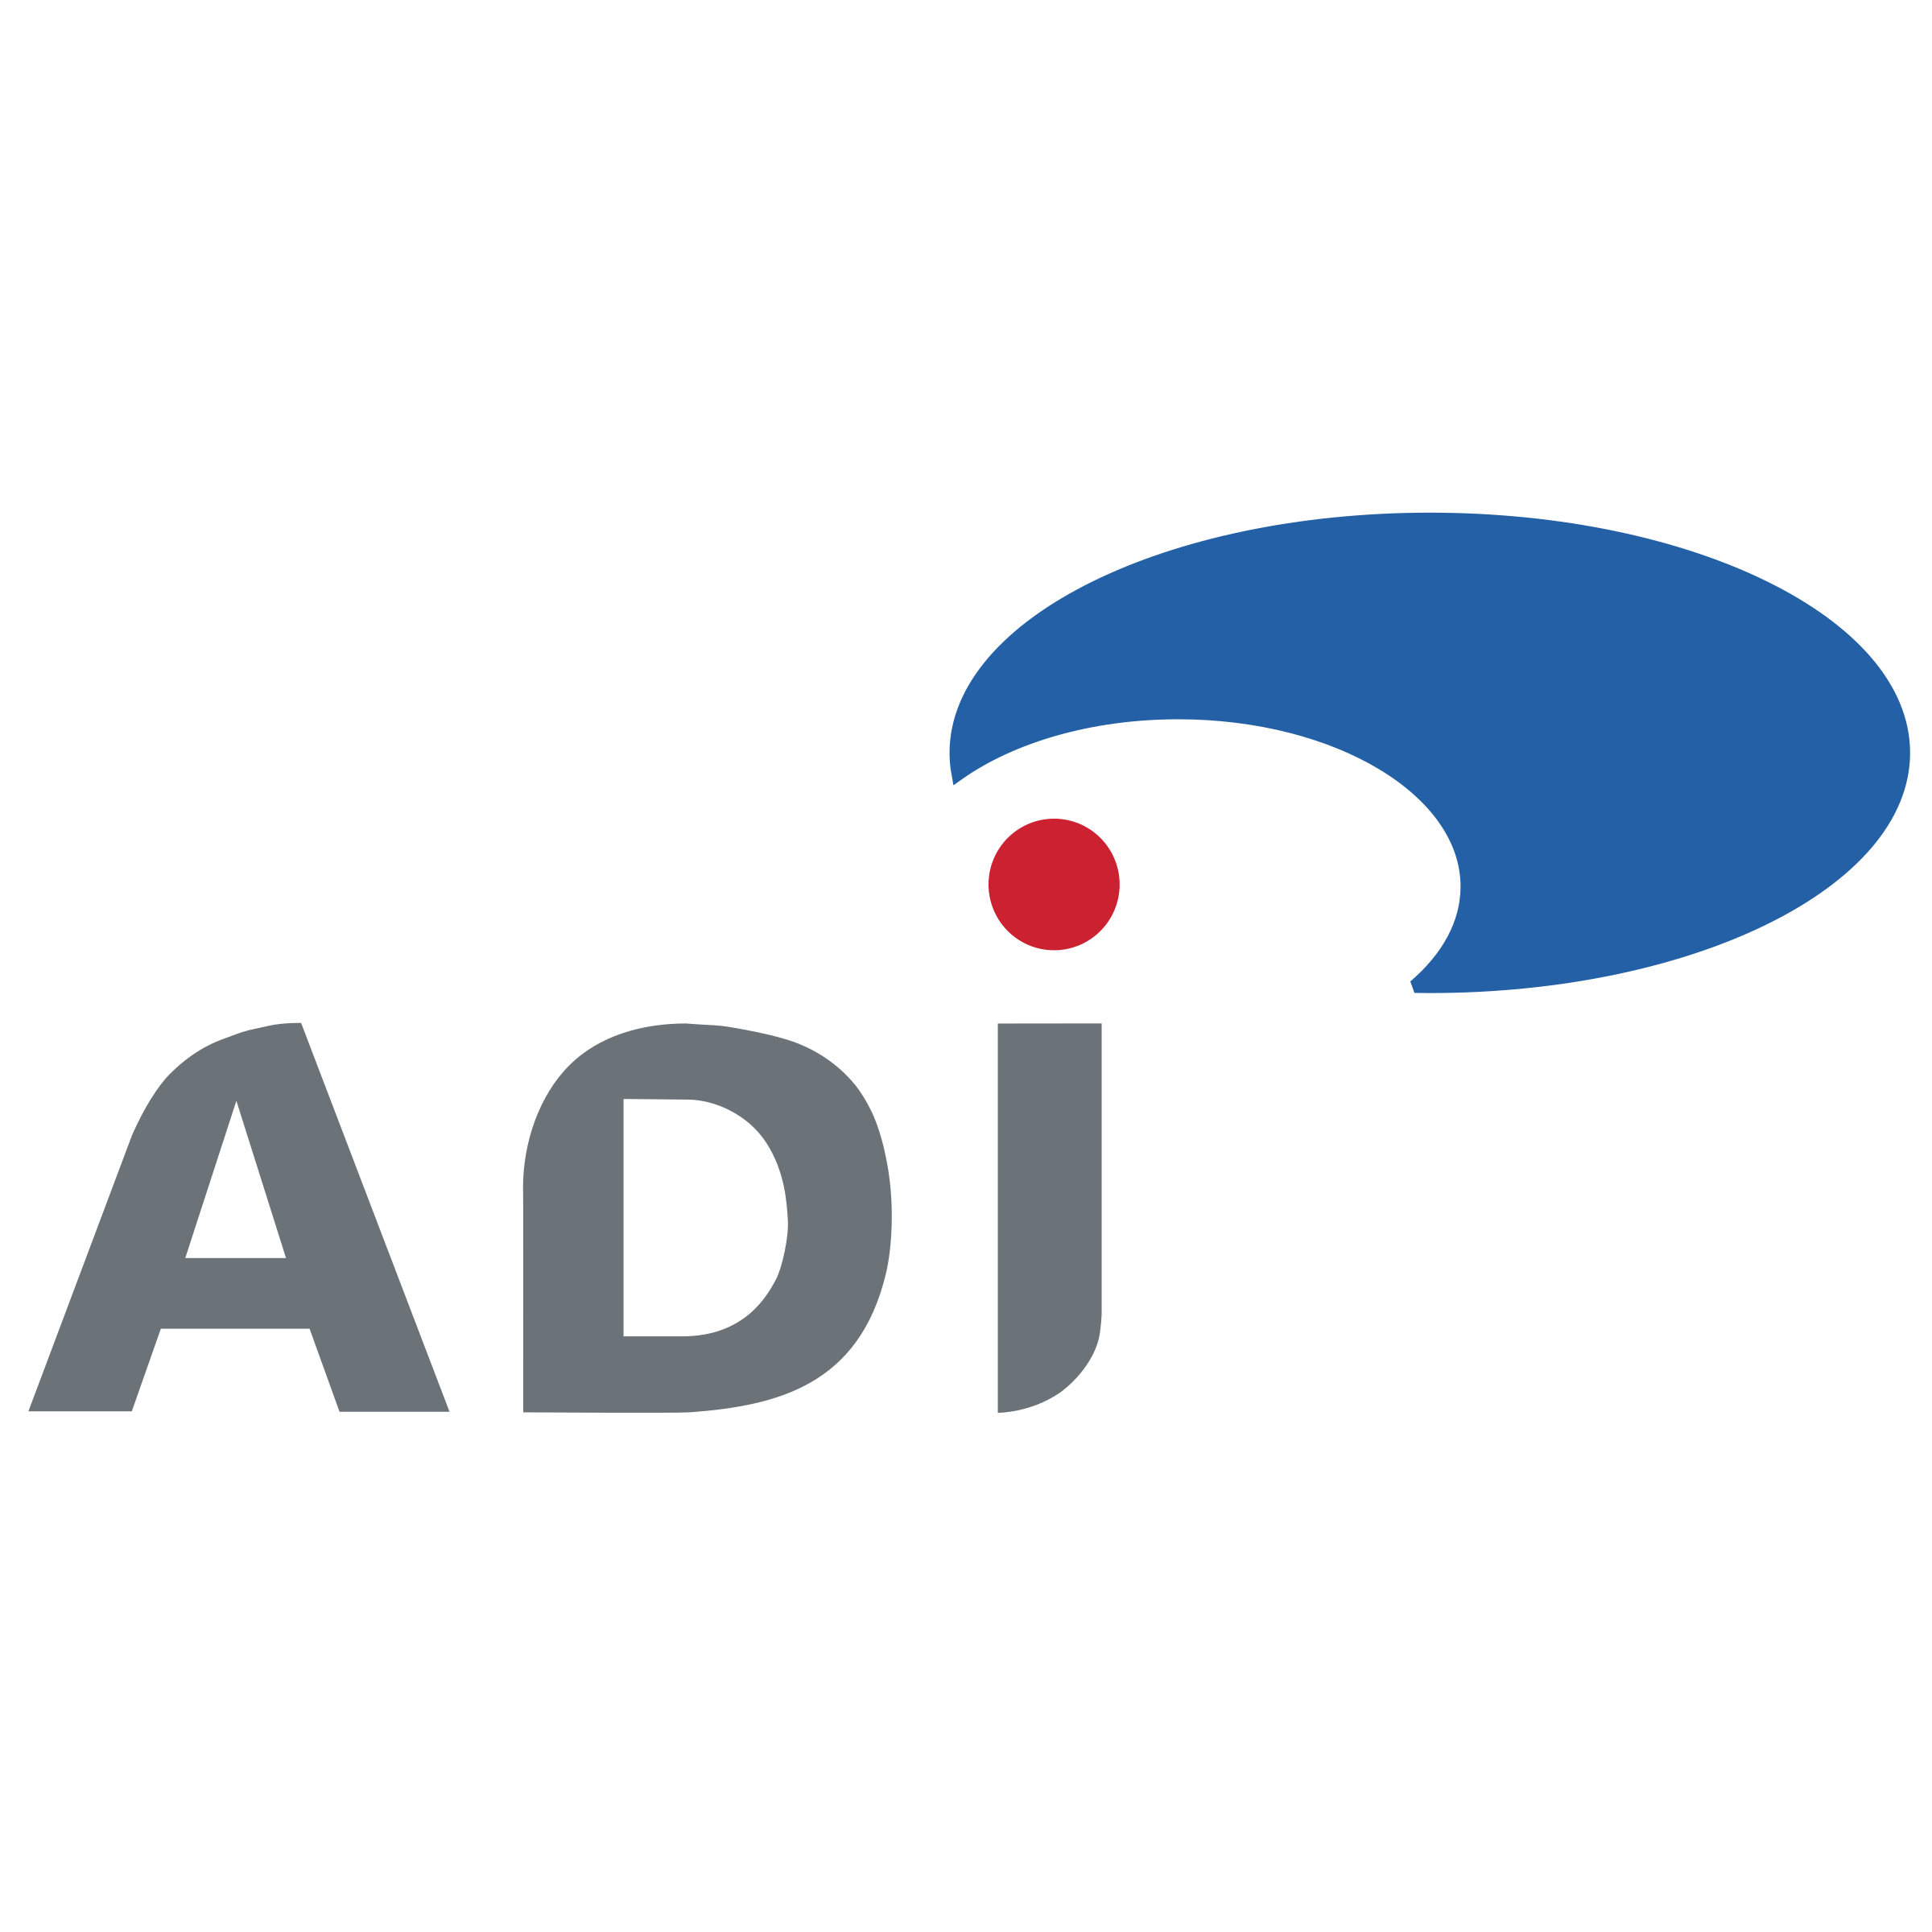 Adi Logo - ADI Logo PNG Transparent & SVG Vector - Freebie Supply